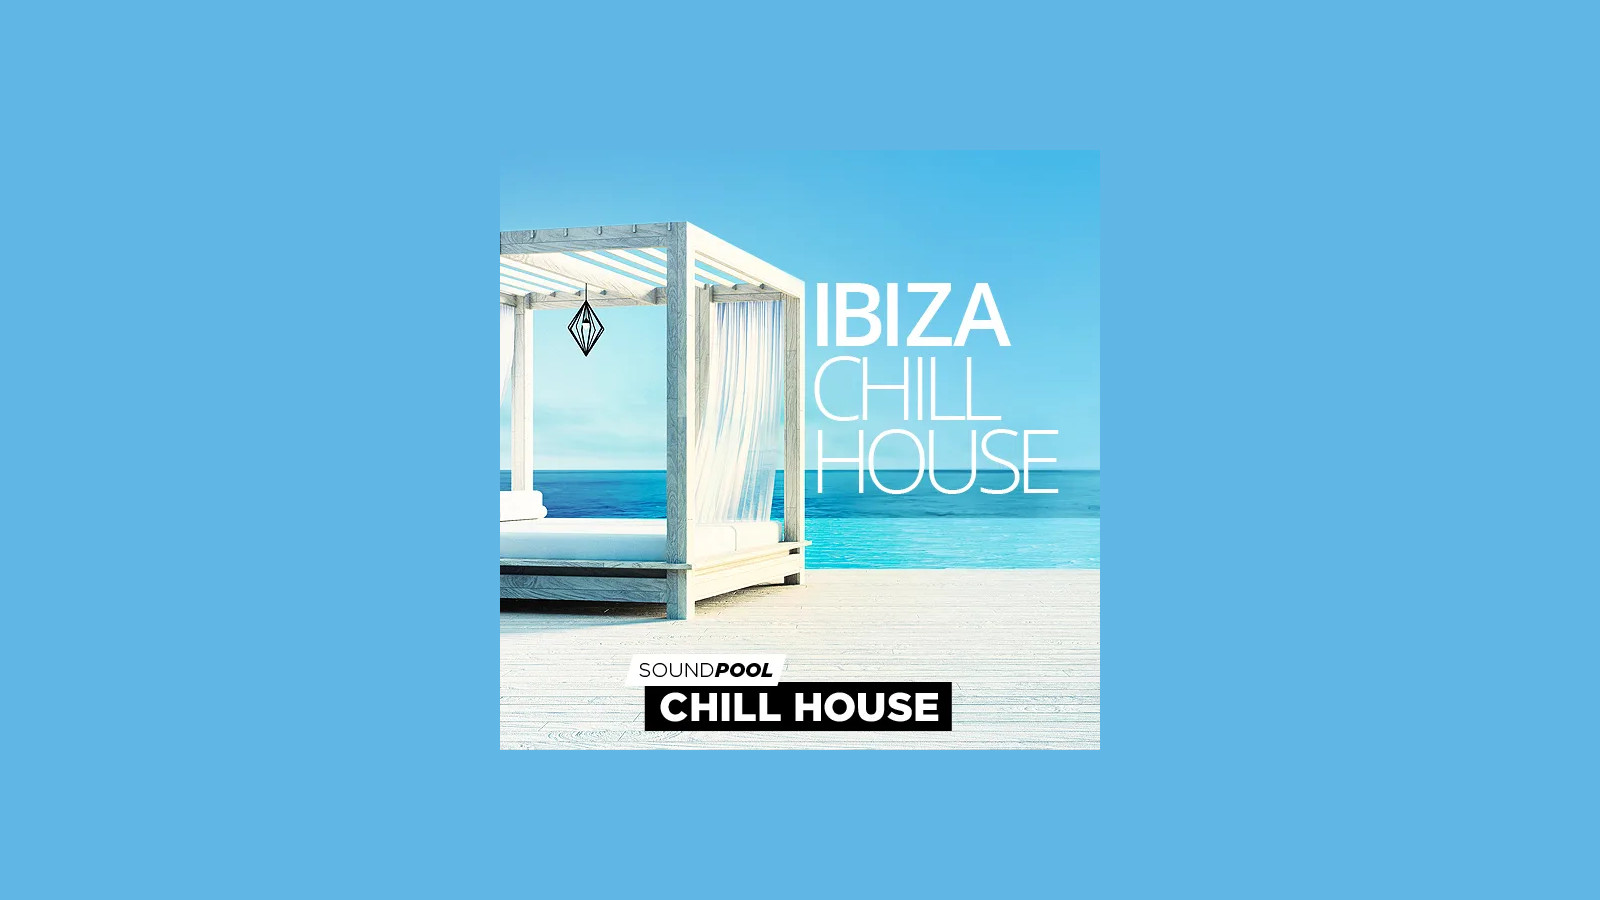 [$ 5.65] MAGIX Soundpool Ibiza Chill House ProducerPlanet CD Key